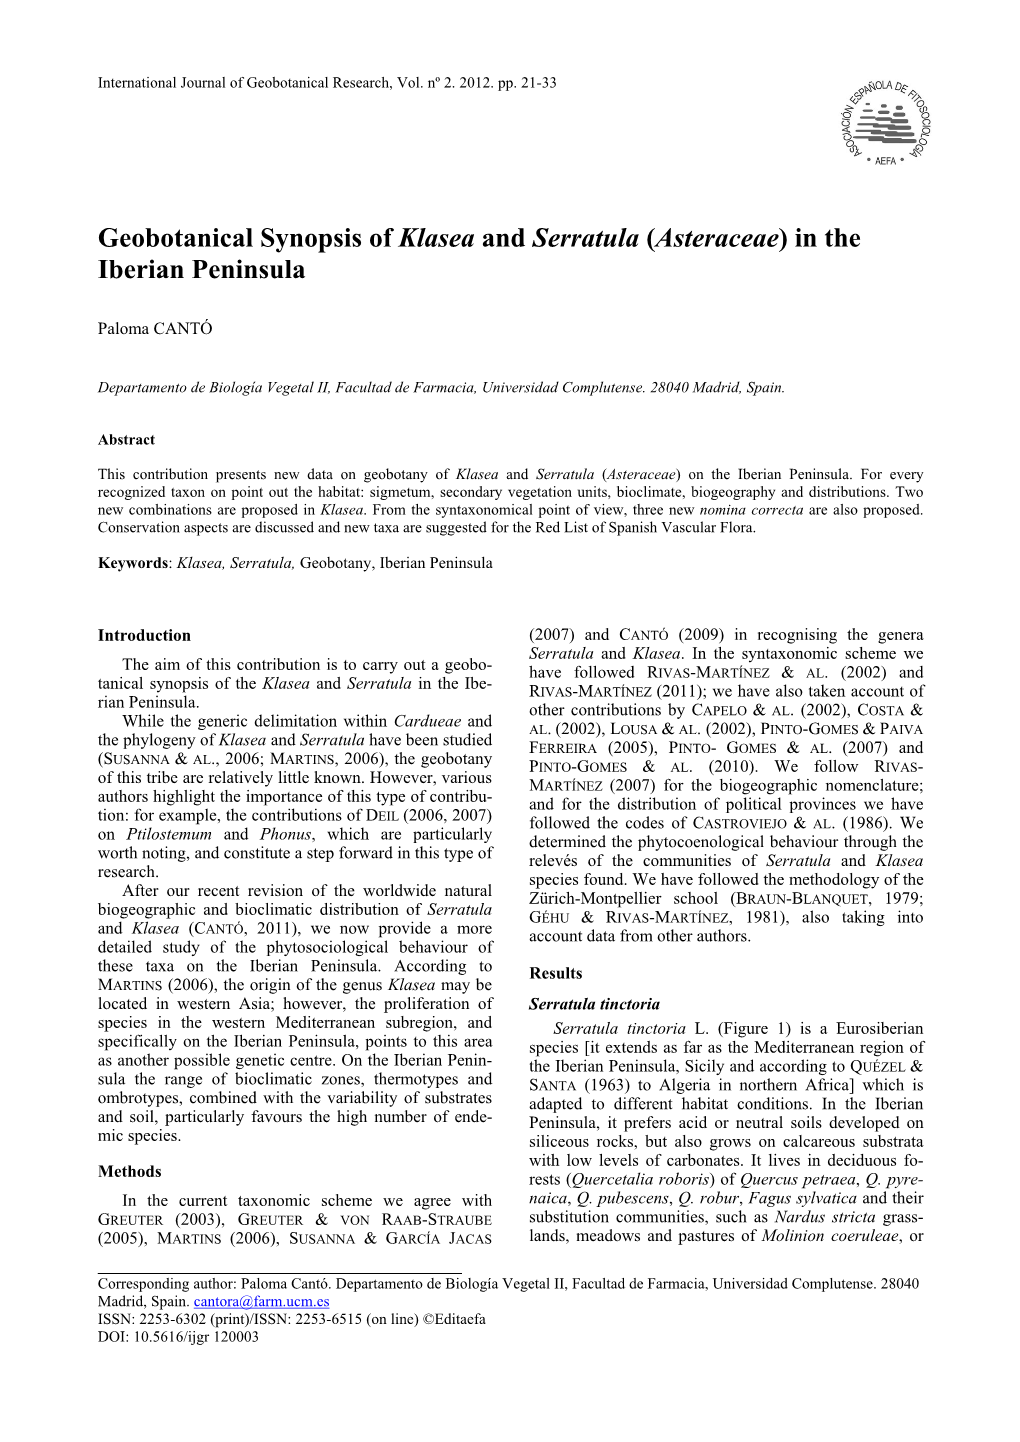 Geobotanical Synopsis of Klasea and Serratula (Asteraceae) in the Iberian Peninsula